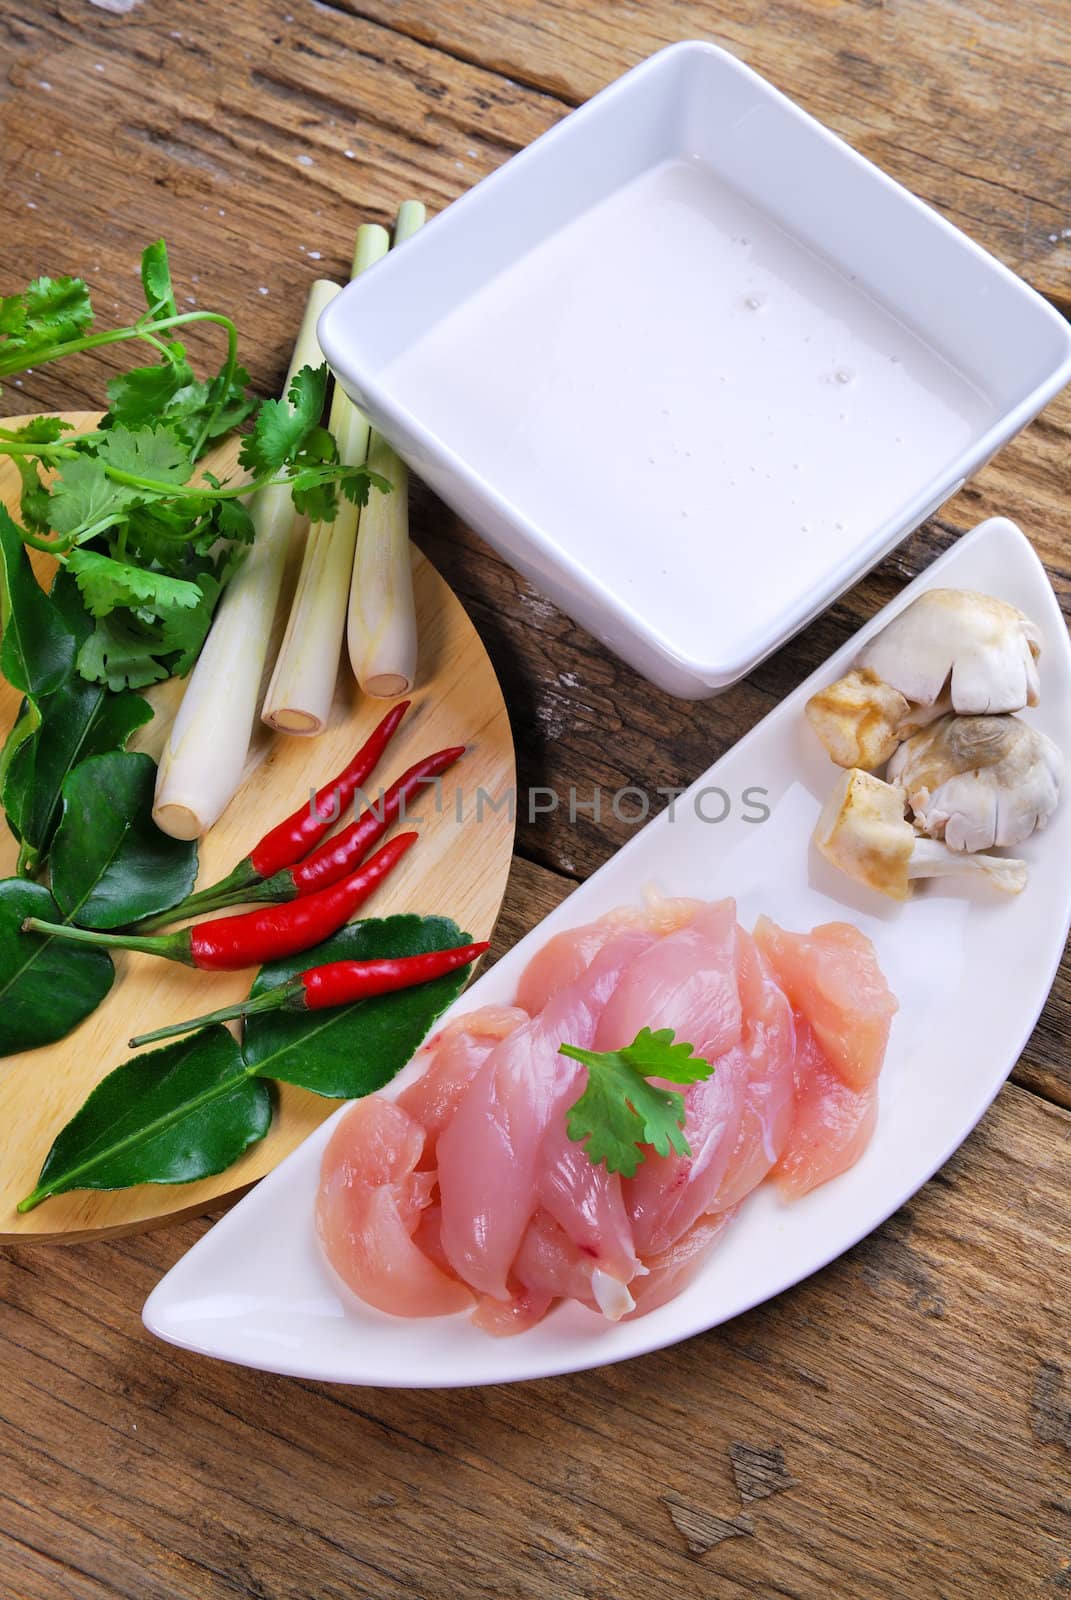 thai cuisine - tom kha kai - chicken in coconut milk soup  by teen00000